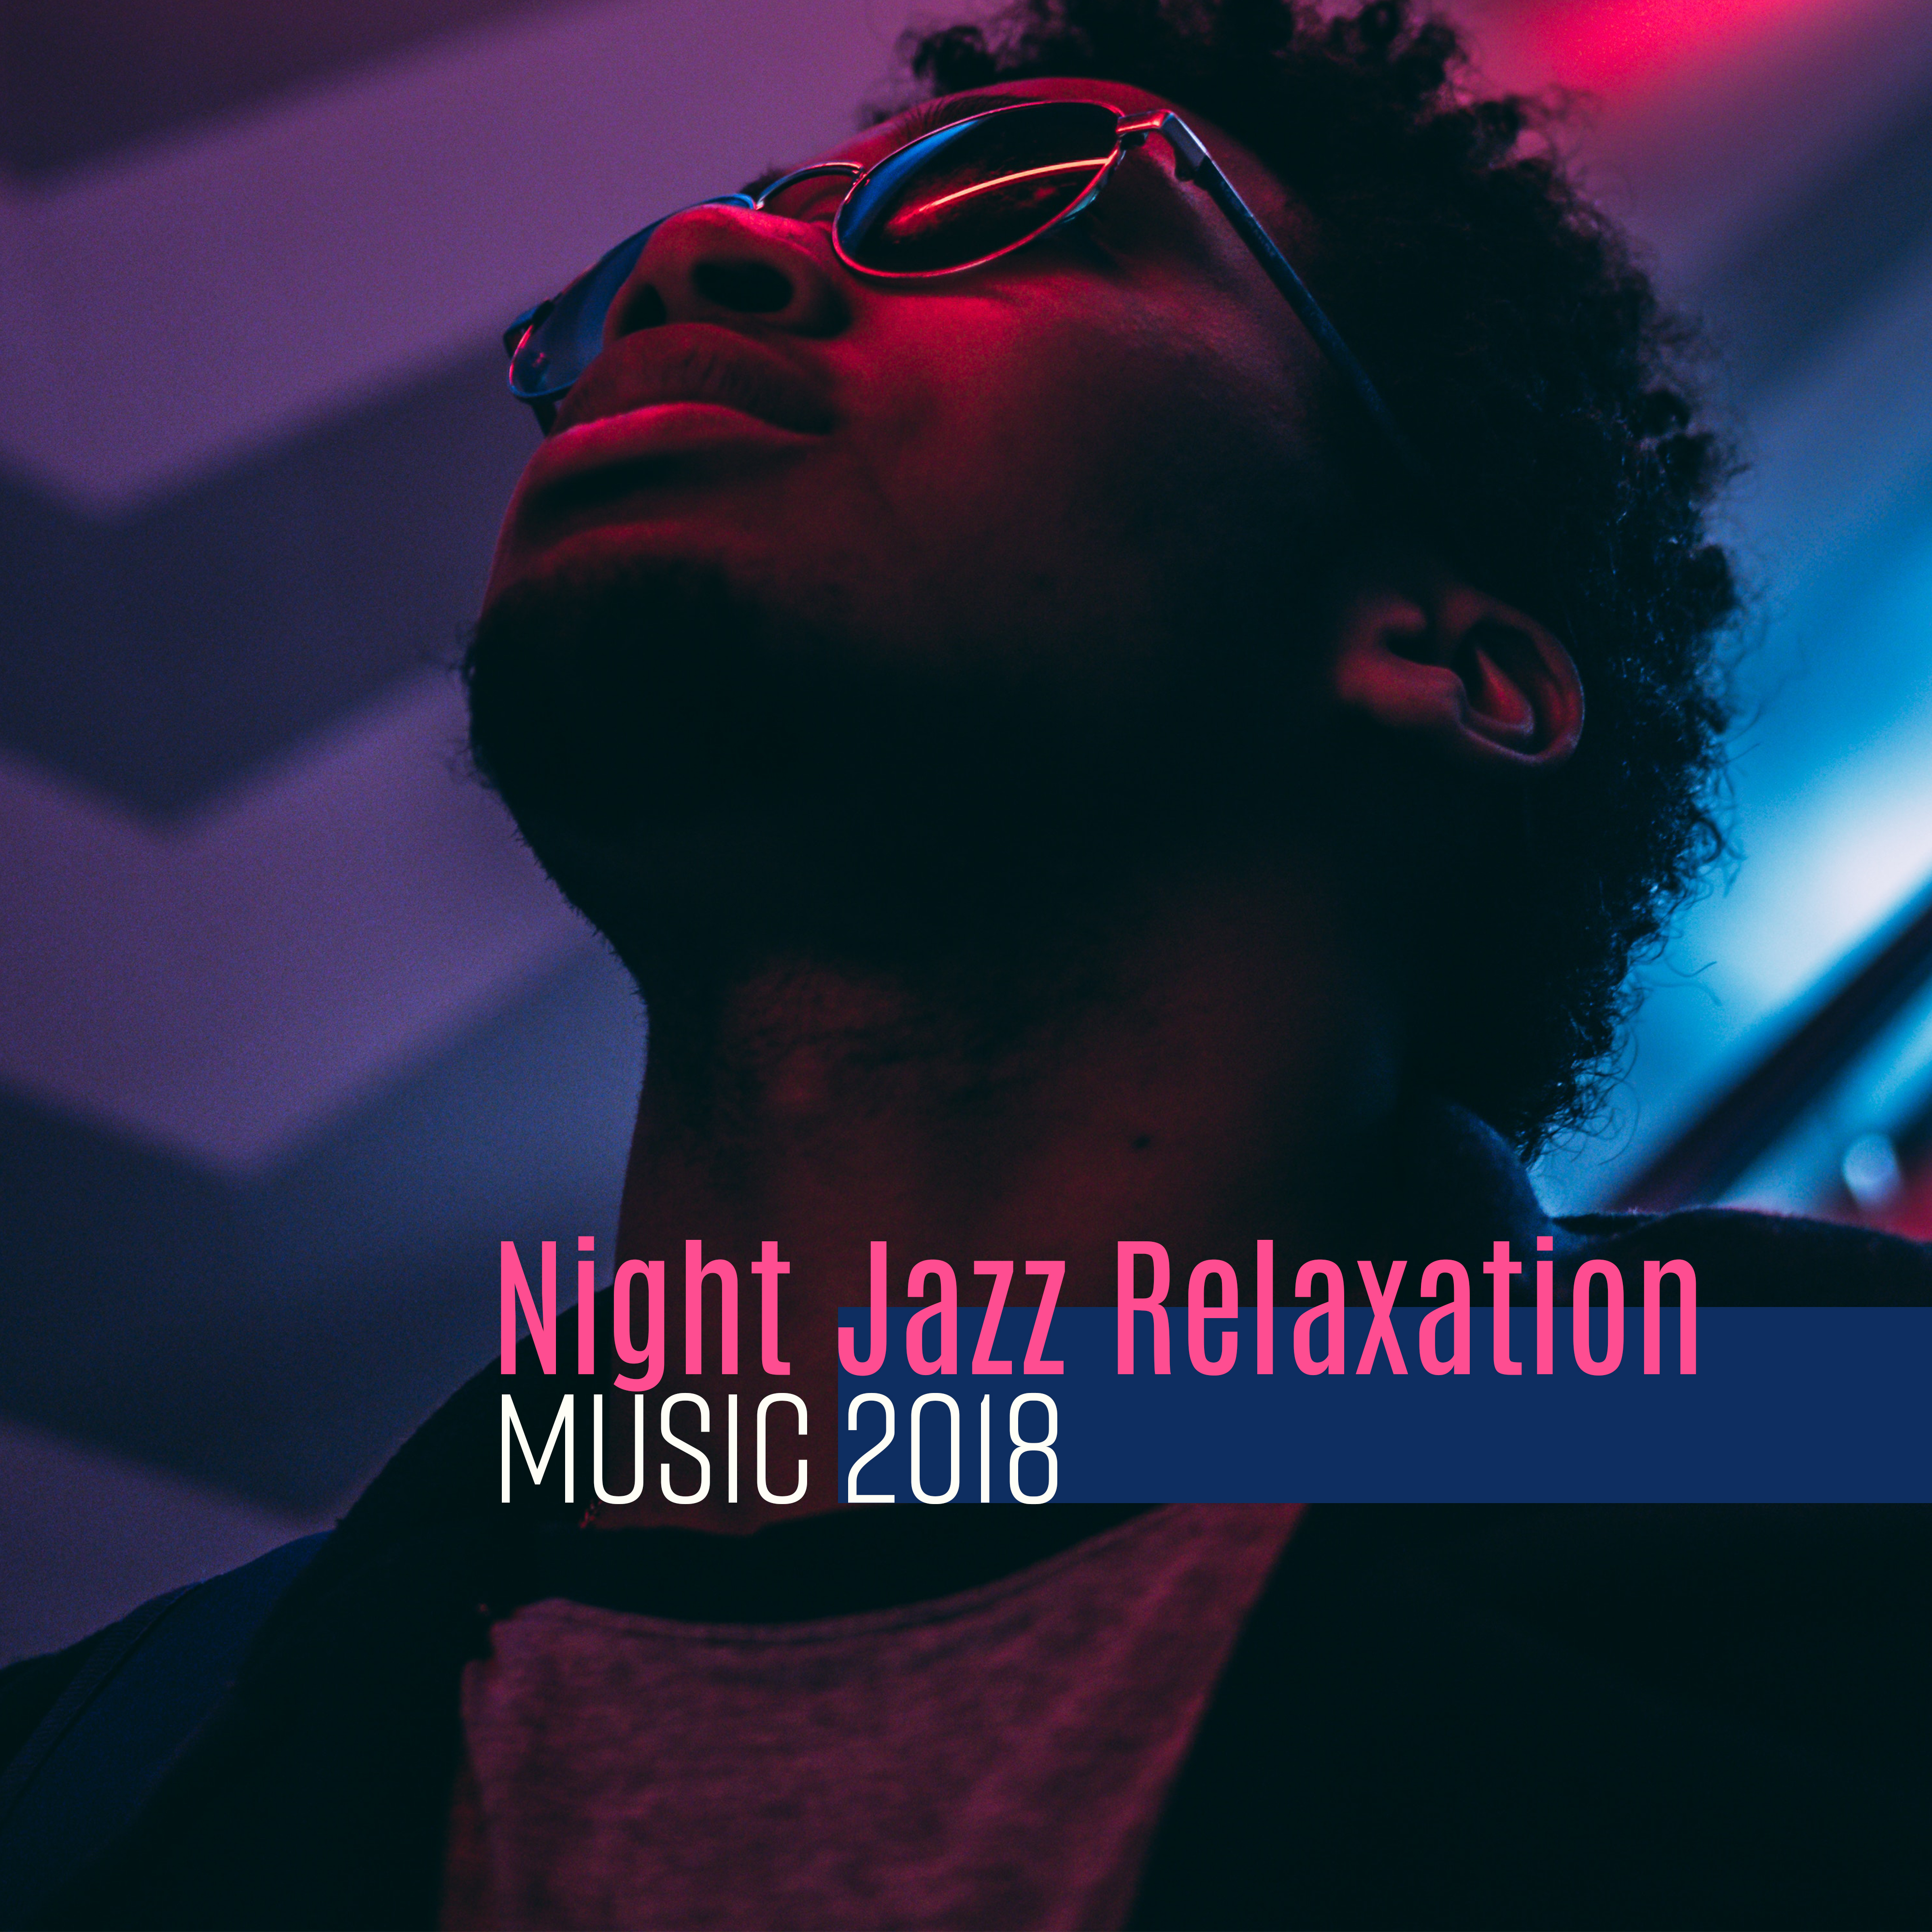 Night Jazz Relaxation Music 2018